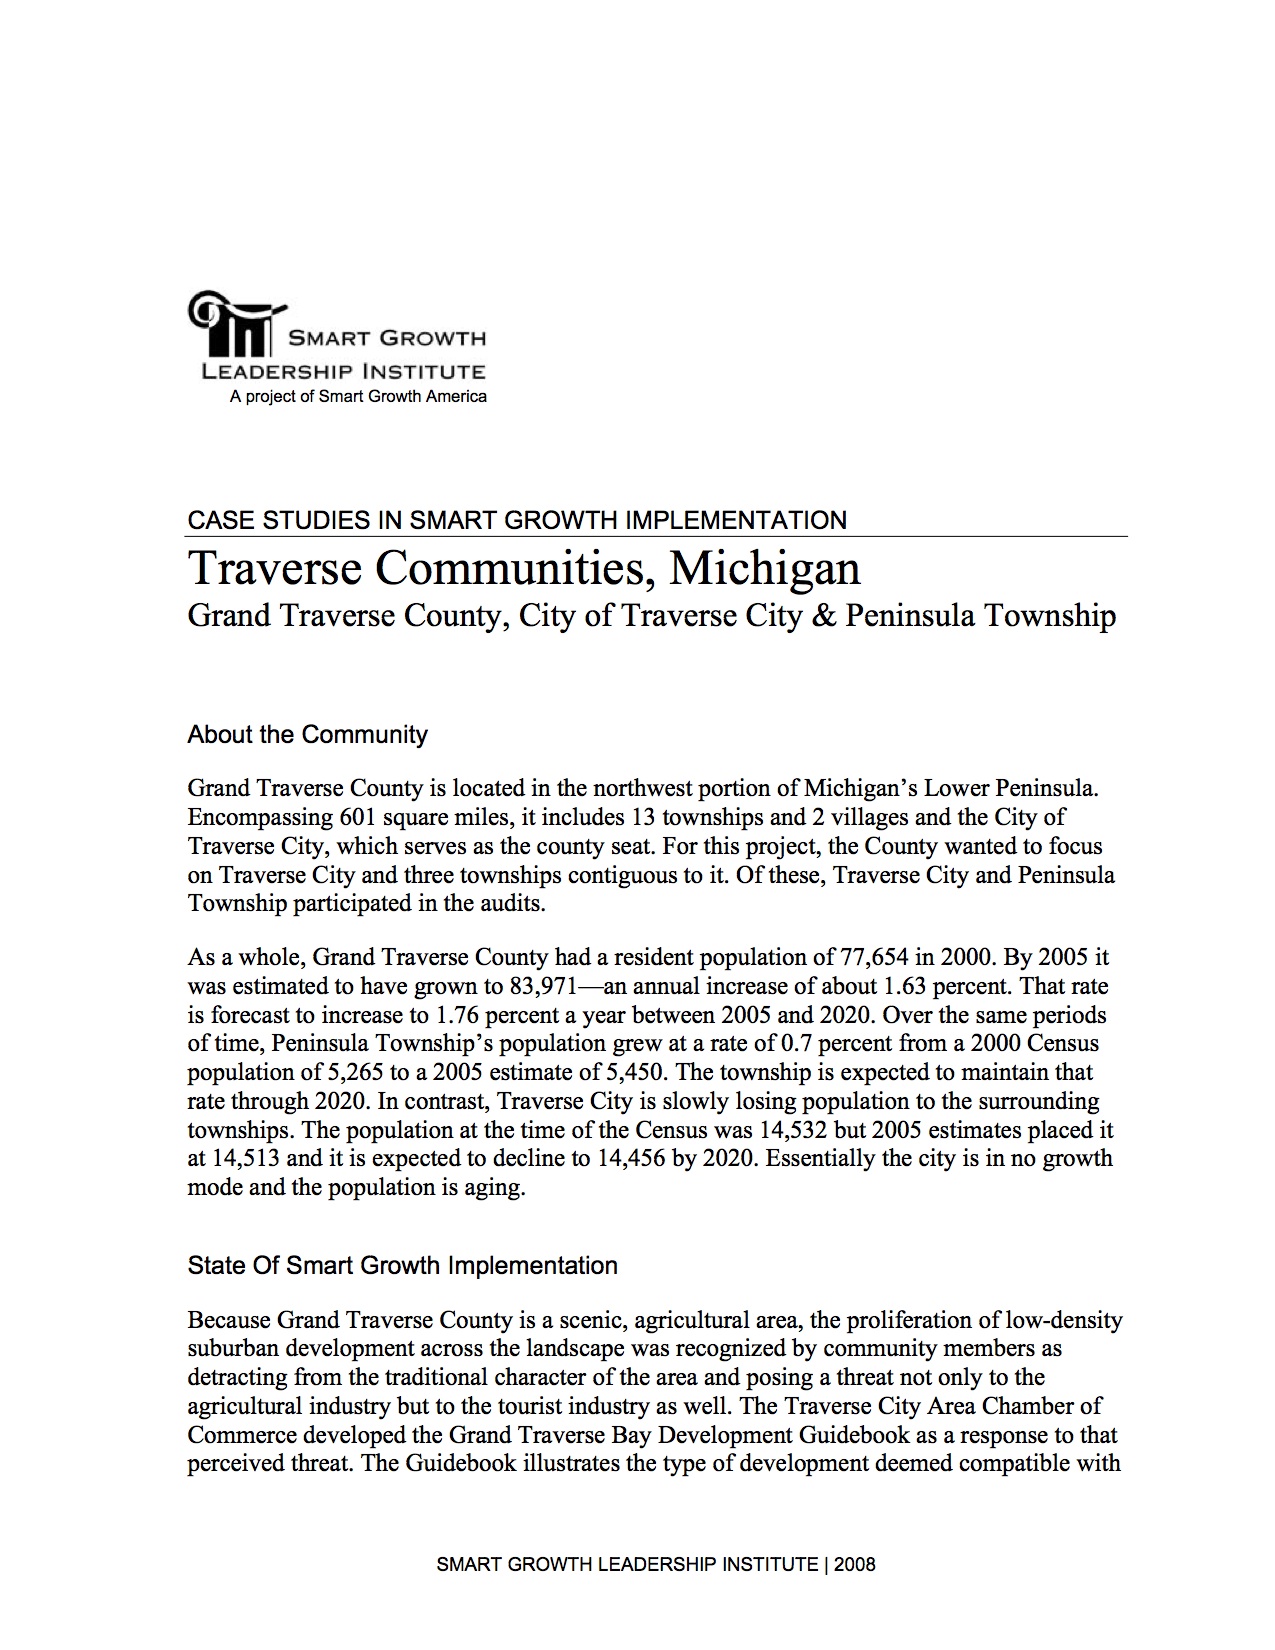 Case Studies in Smart Growth Implementation: Traverse Communities, Michigan